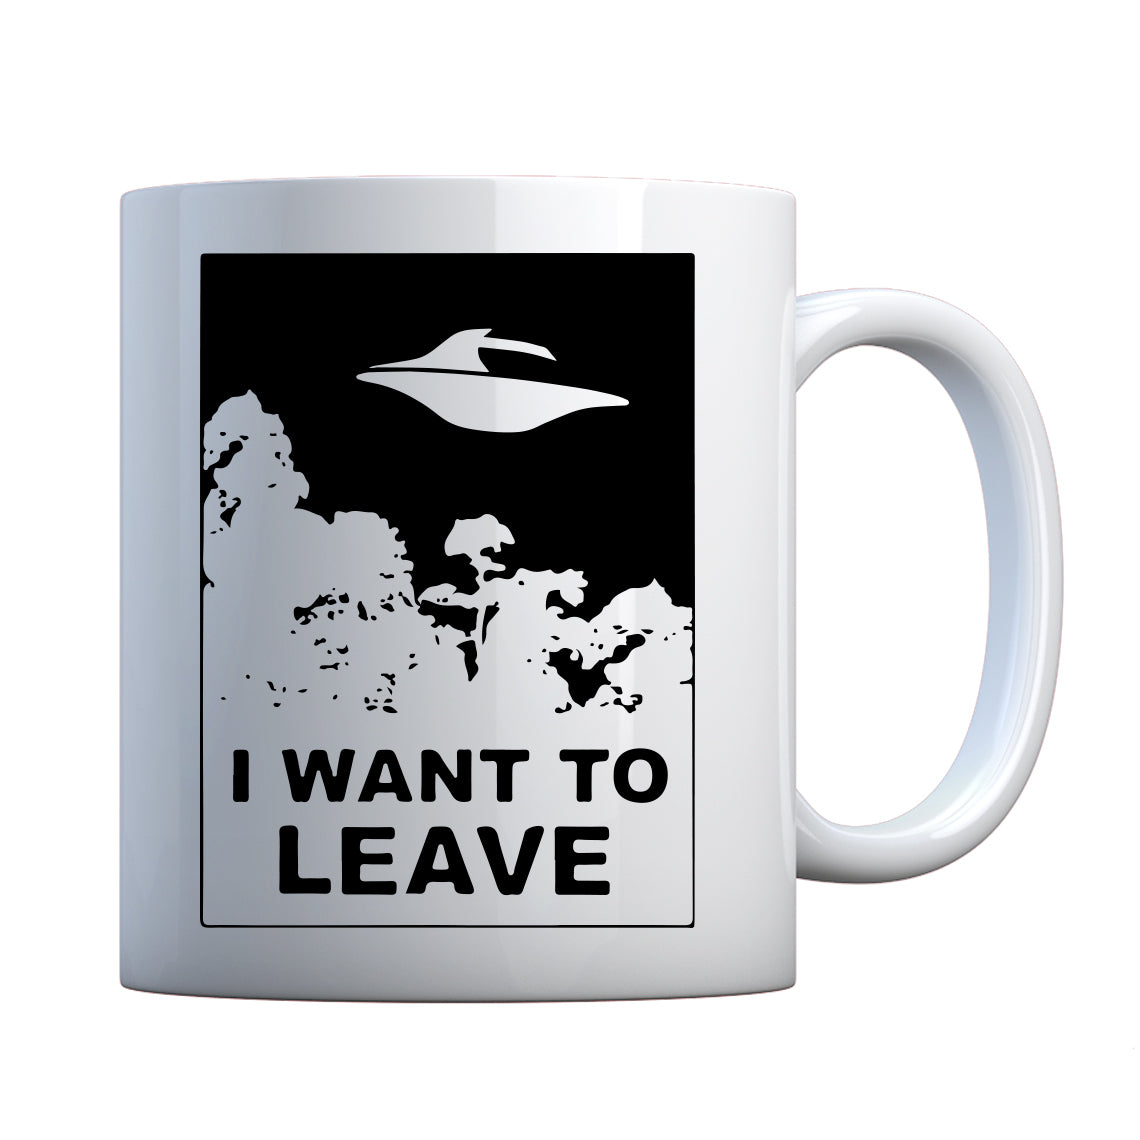 I Want to Leave Ceramic Gift Mug